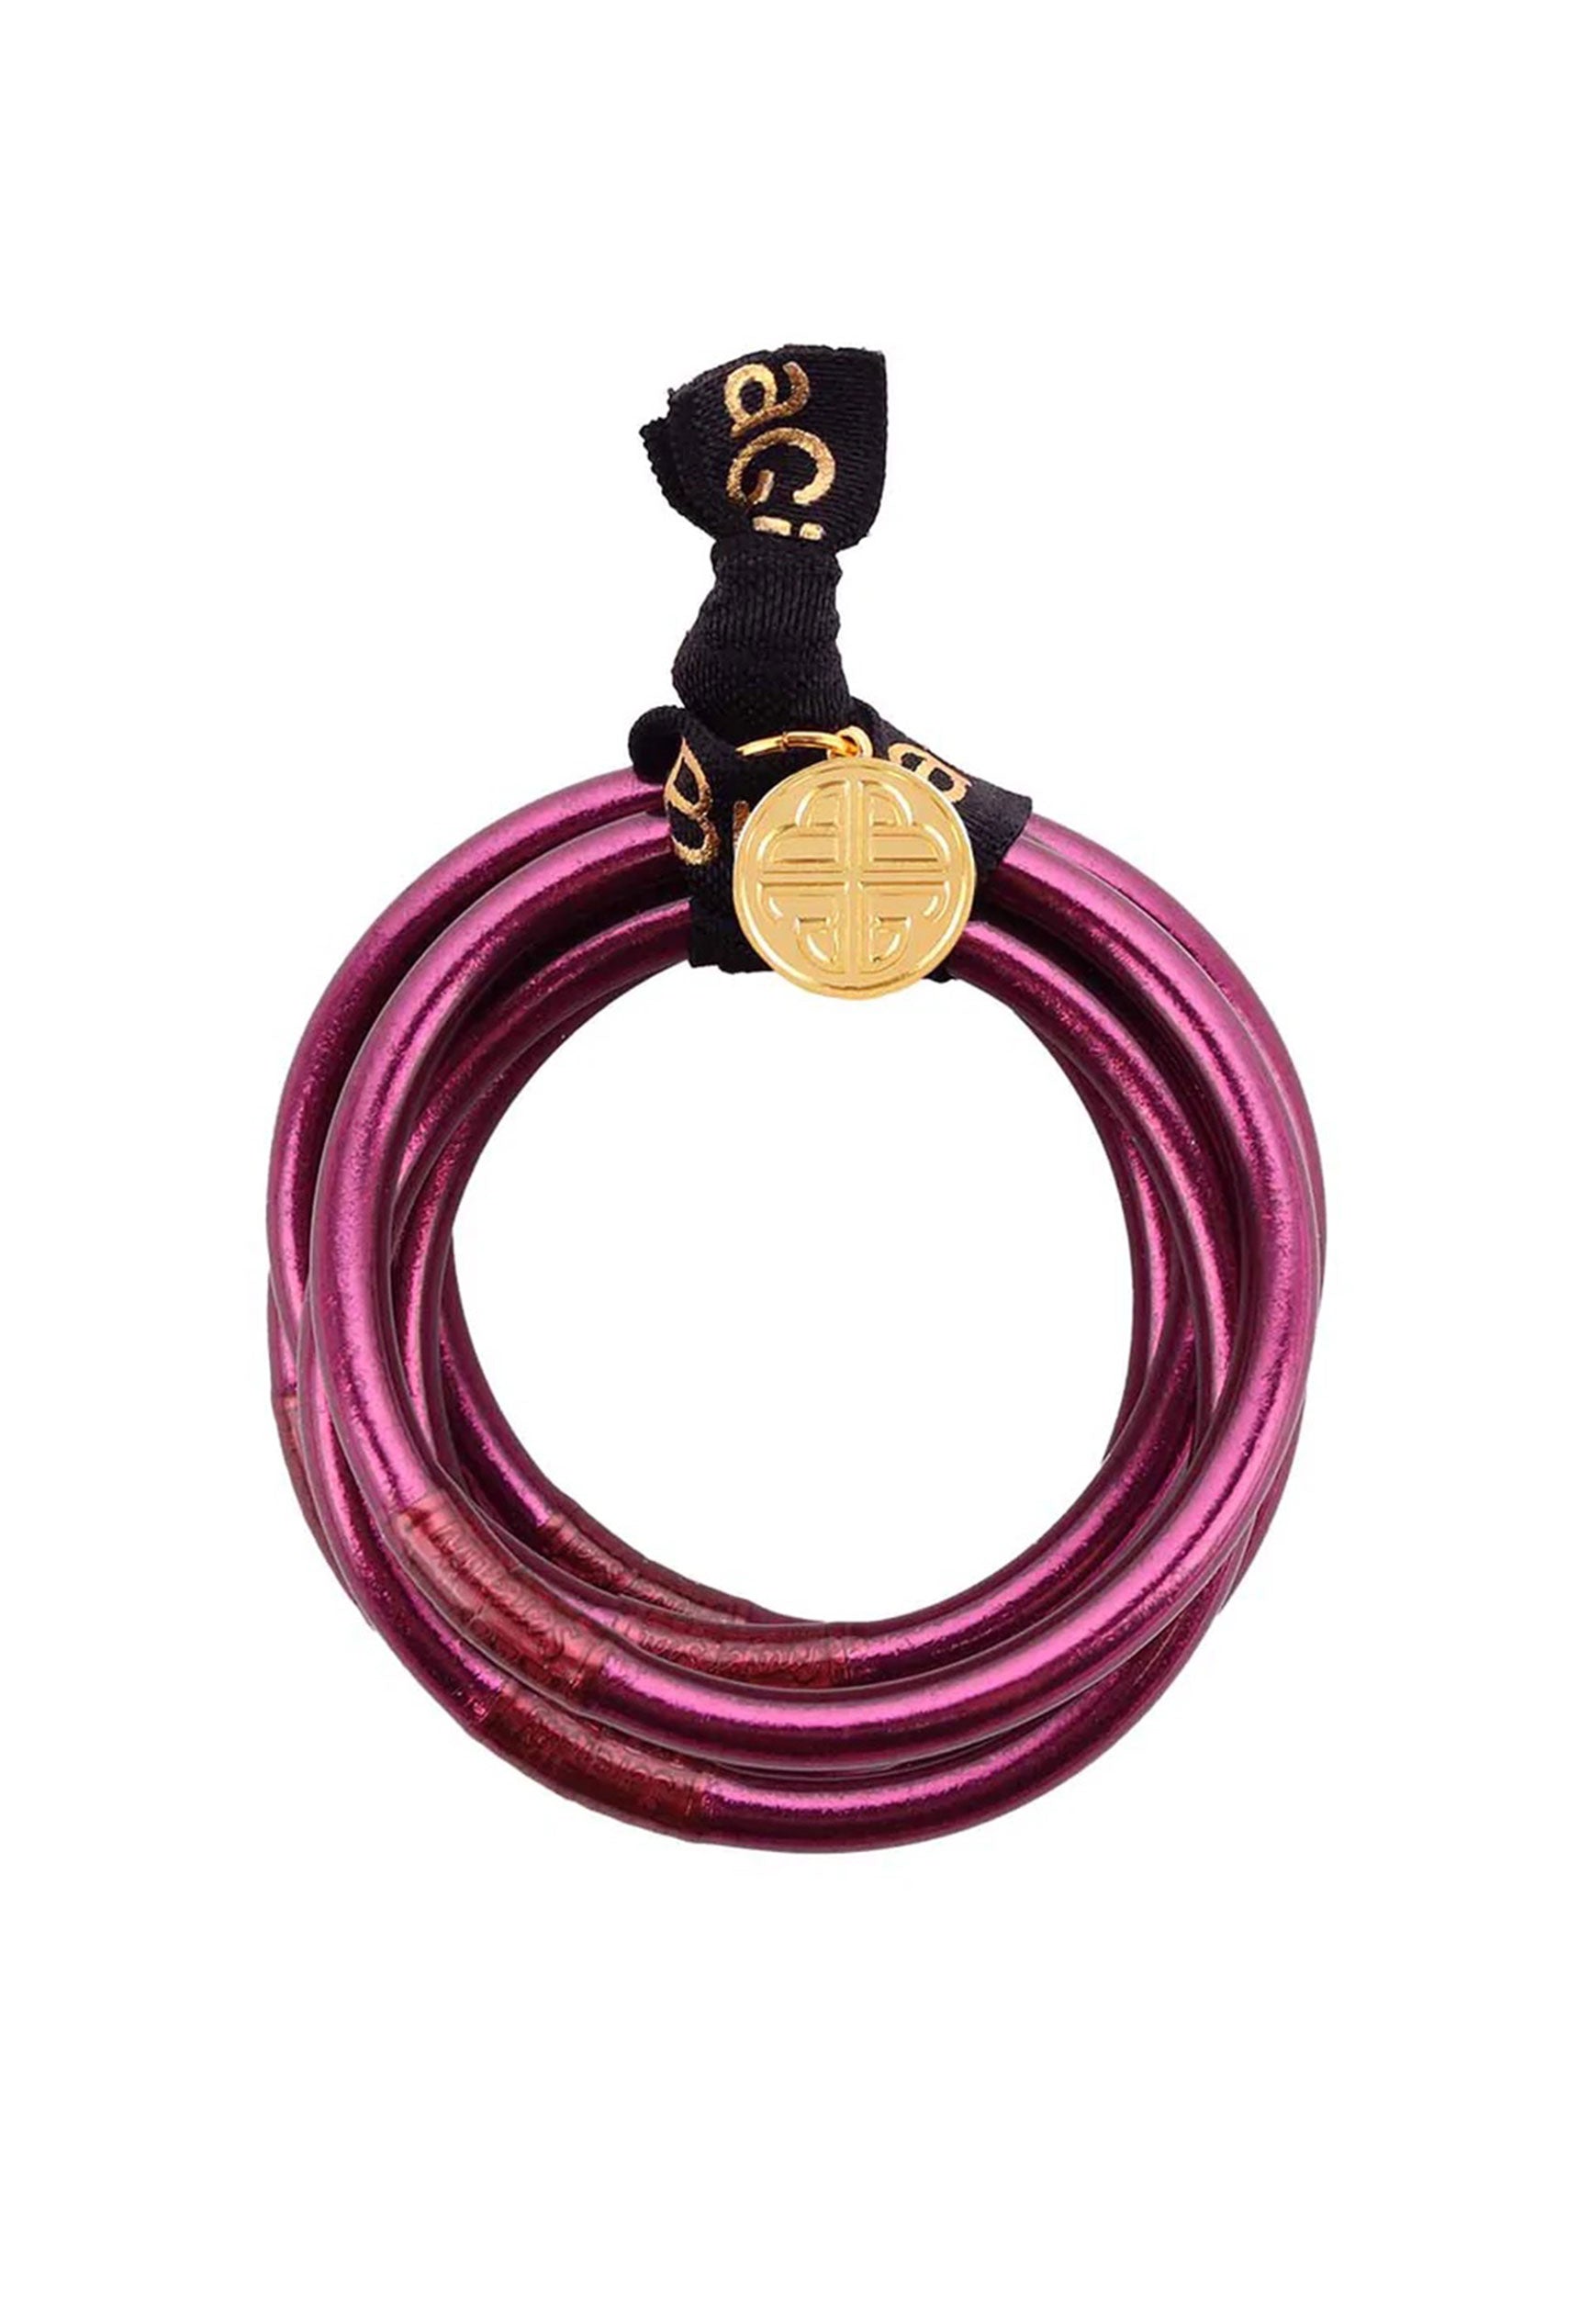 BUDHAGIRL Bangles in Amethyst, purple, set of 6 bangles 